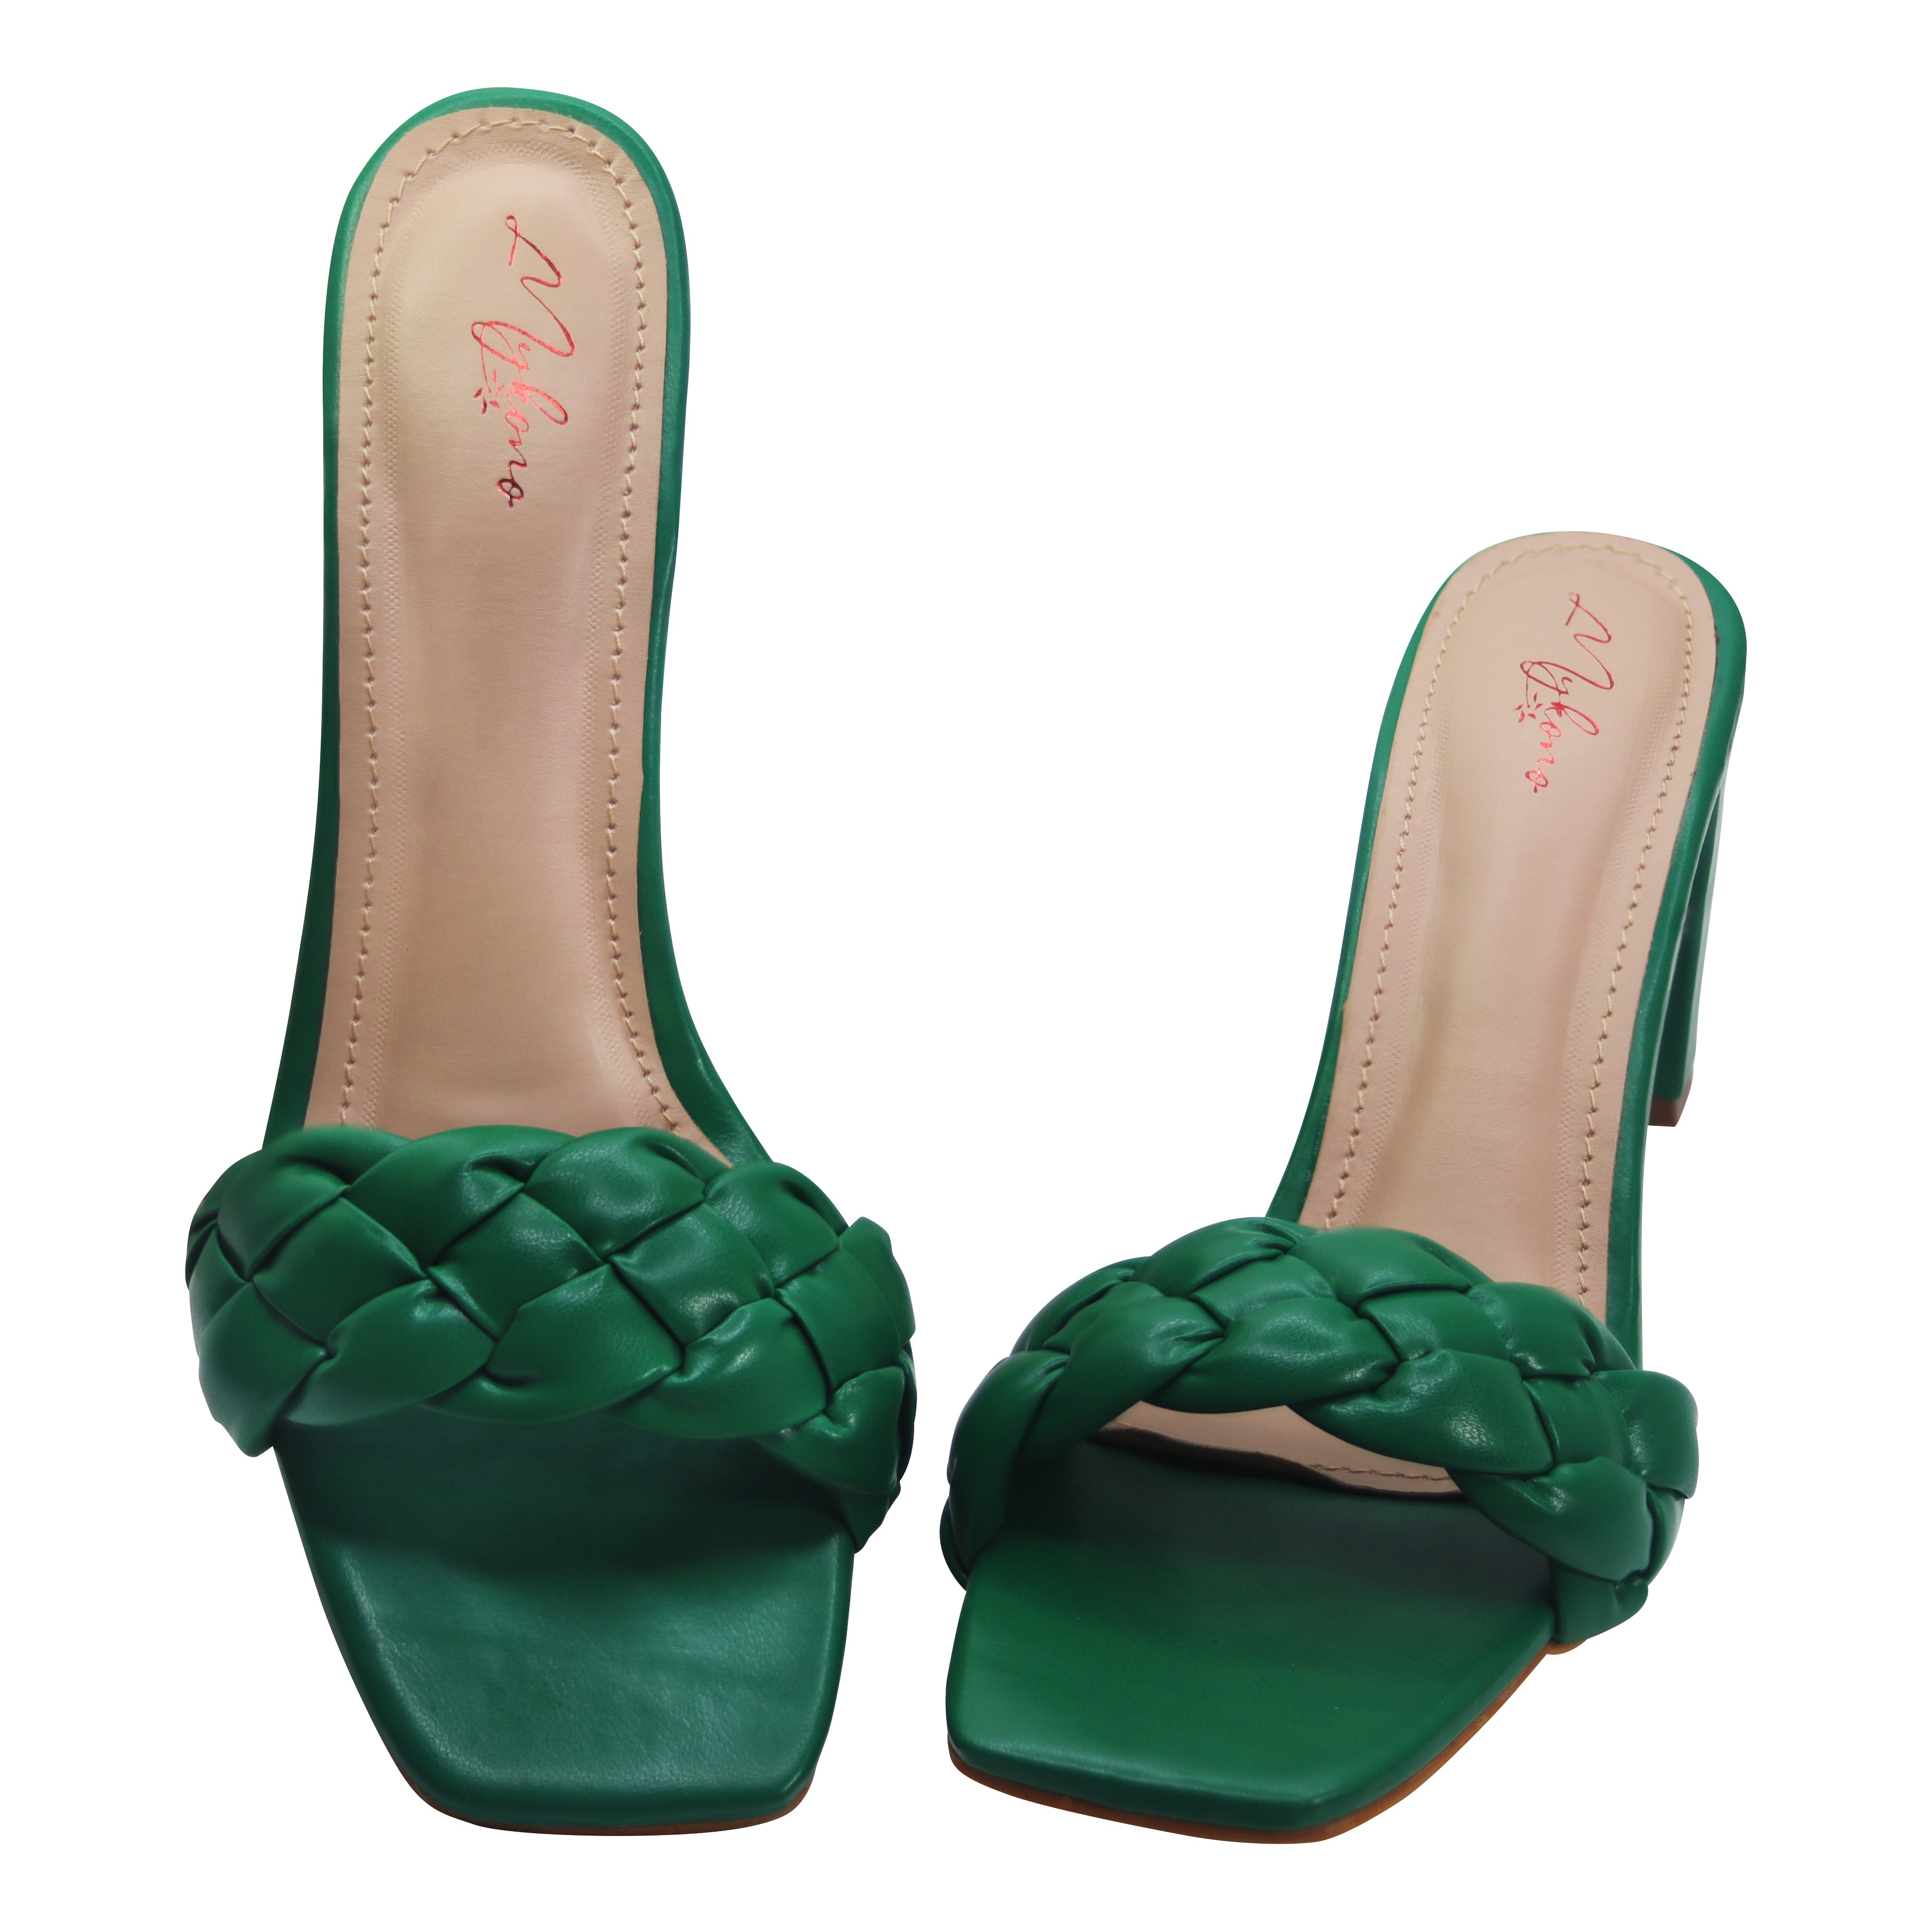 dr. Liza pump - EMERALD GREEN | the most comfortable high heels | orthotic